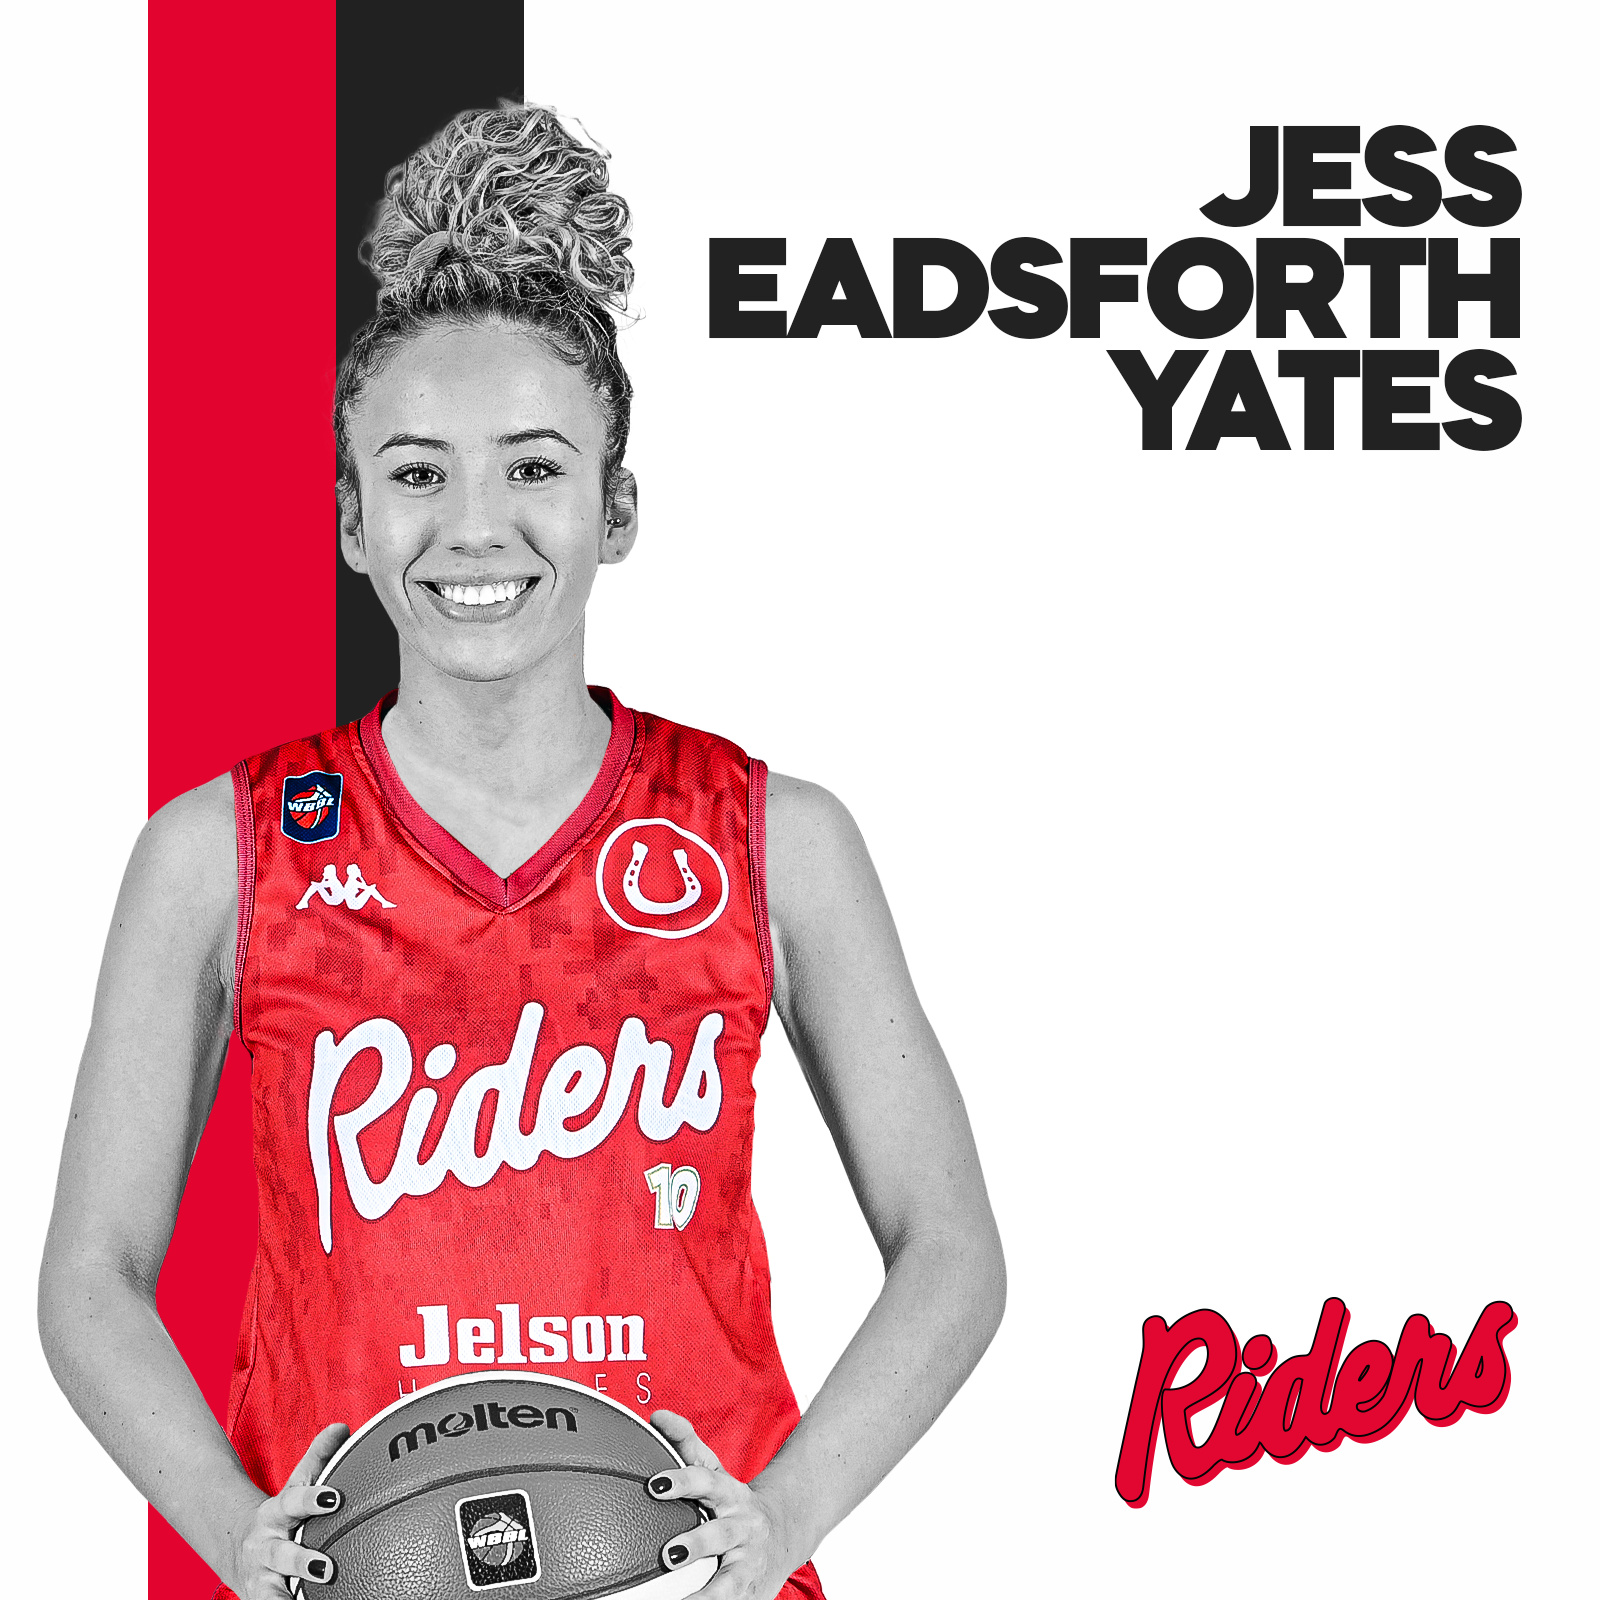 Jessica Eadsforth-Yates